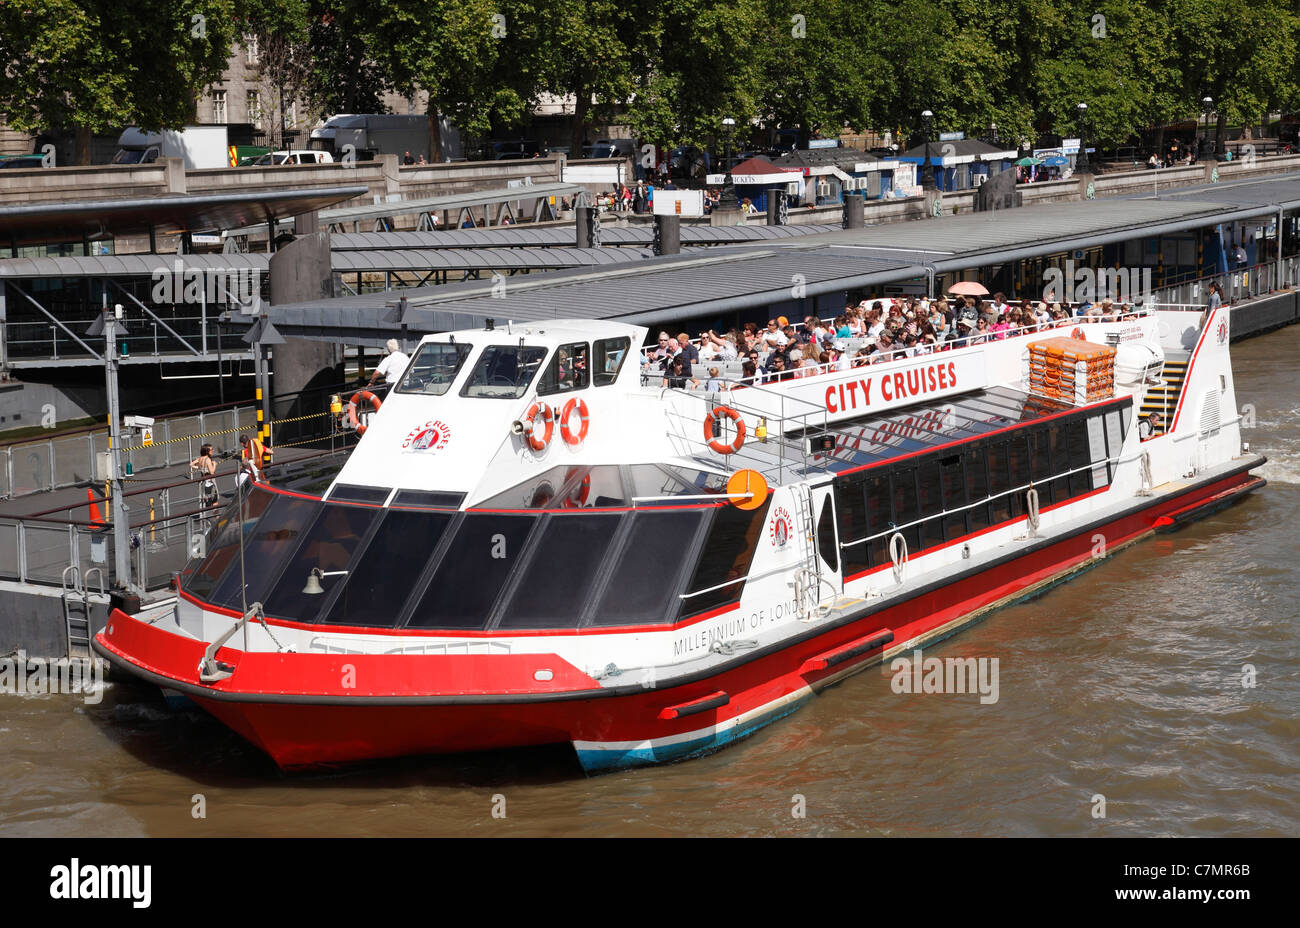 City Cruises pleasure boat on the River Thames, London, England, U.K. Stock Photo